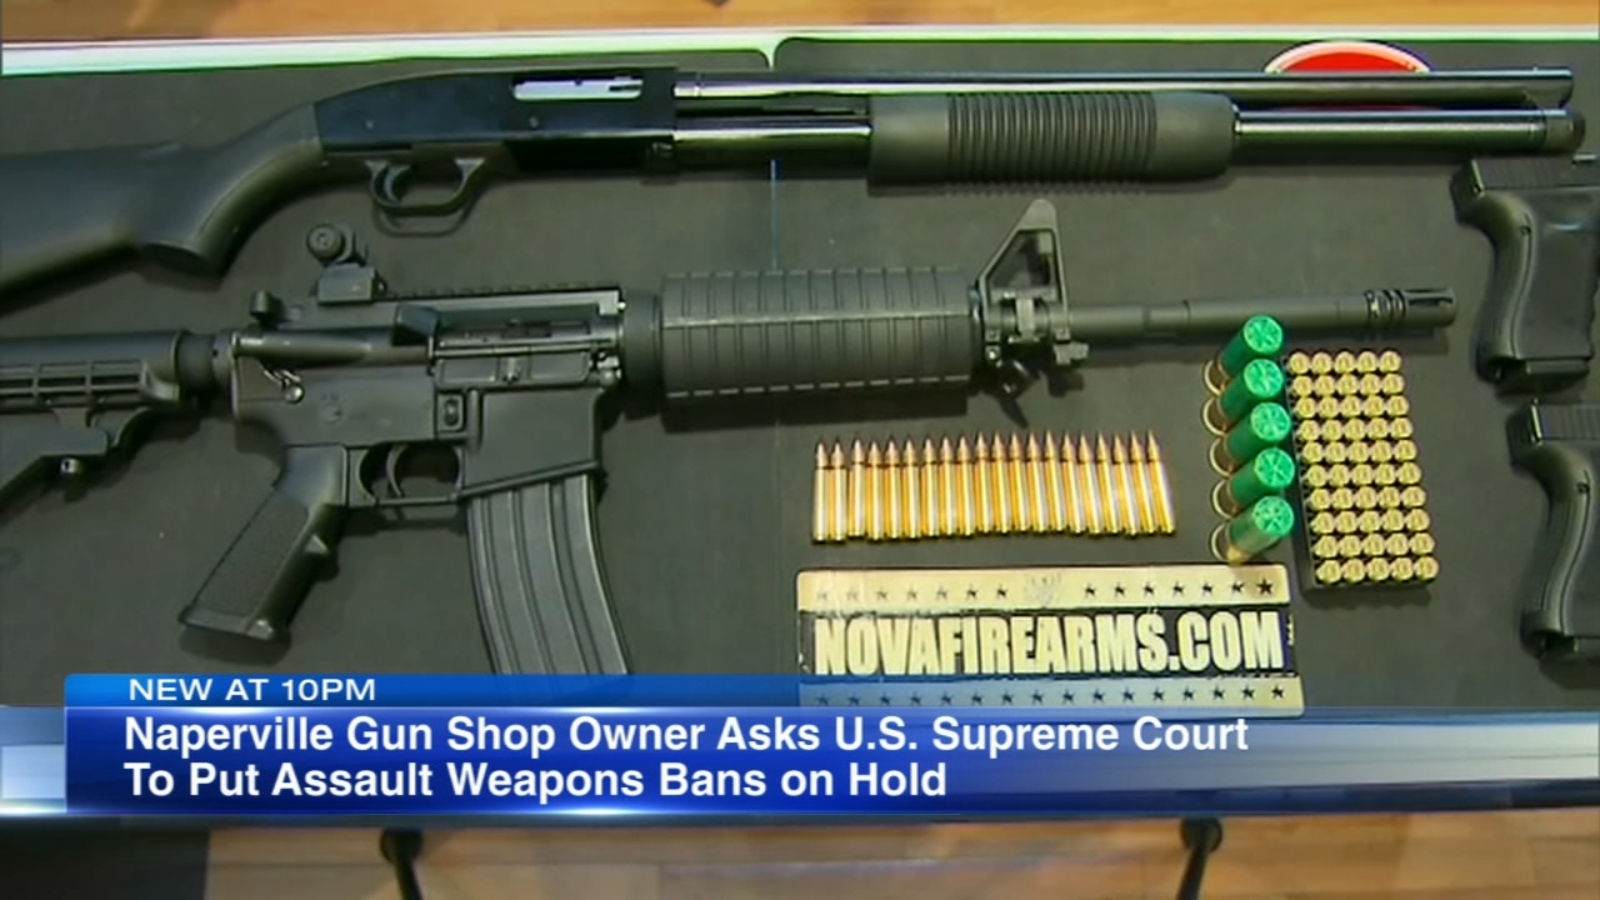 Illinois assault gun ban: The Naperville gun shop owner asked the US Supreme Court to suspend the ban